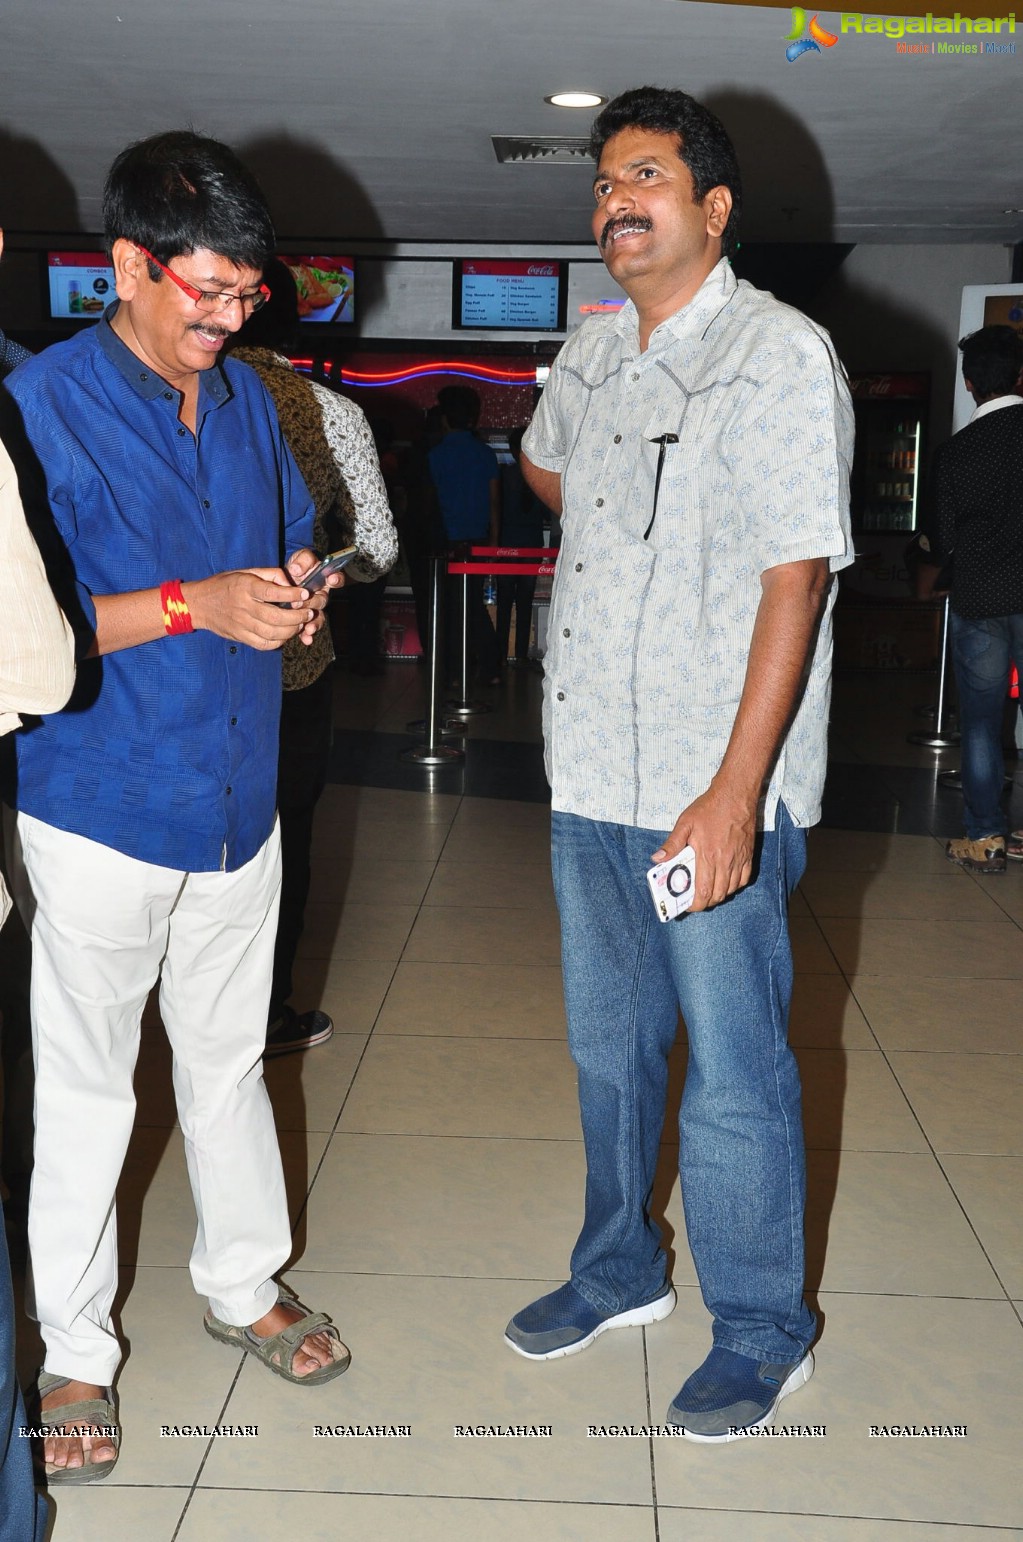 EedoRakam AadoRakam Team at Prasads IMAX, Hyderabad